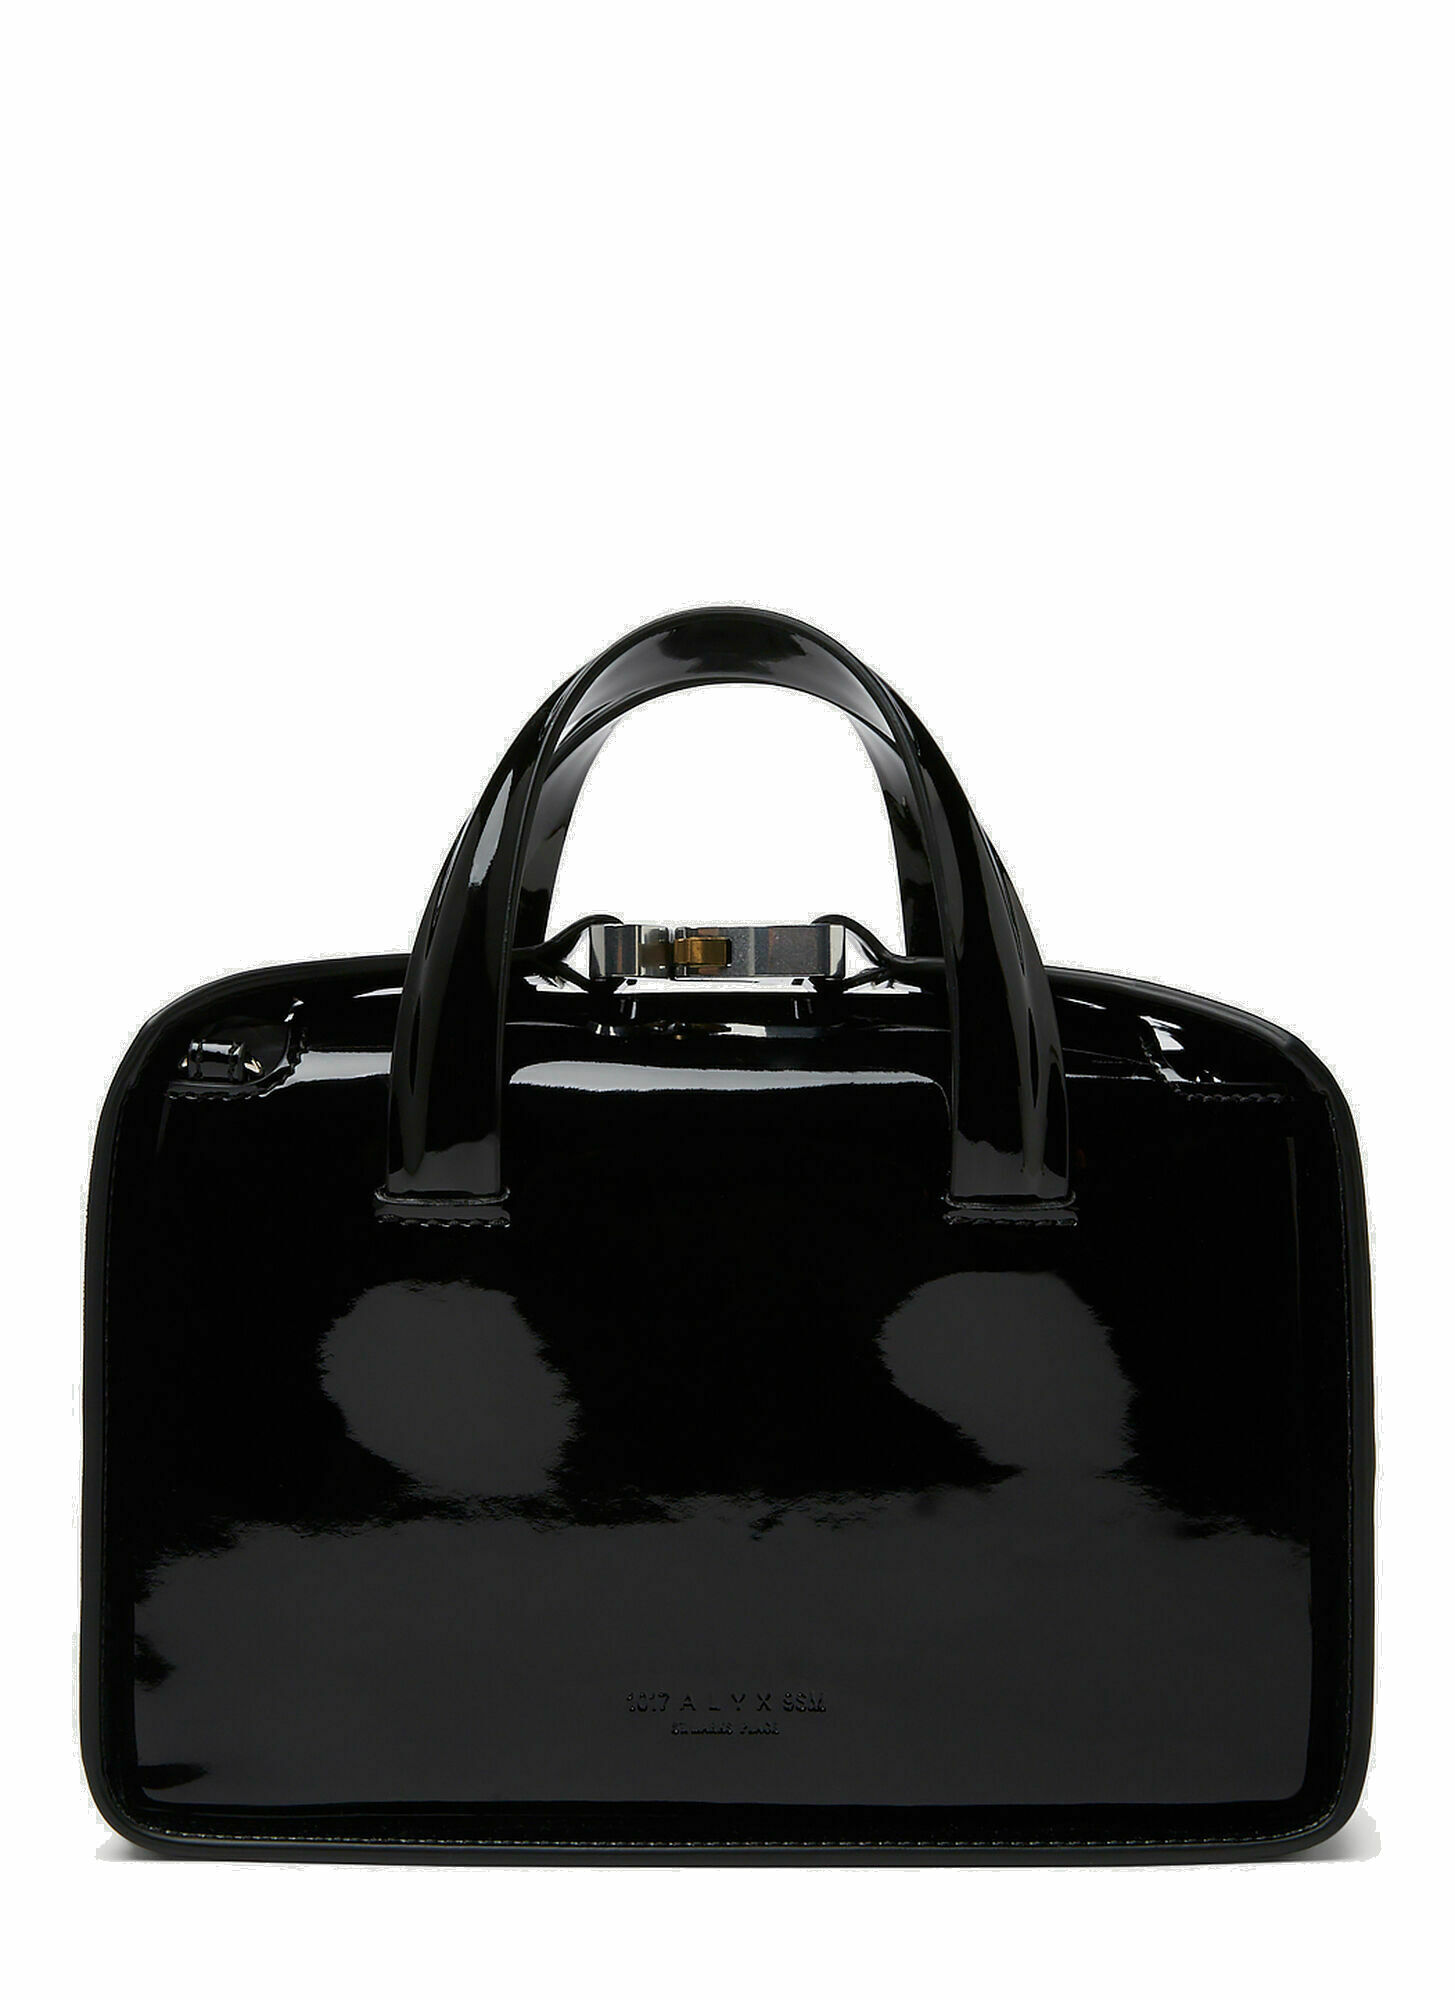 Photo: Brie High Shine Handbag in Black